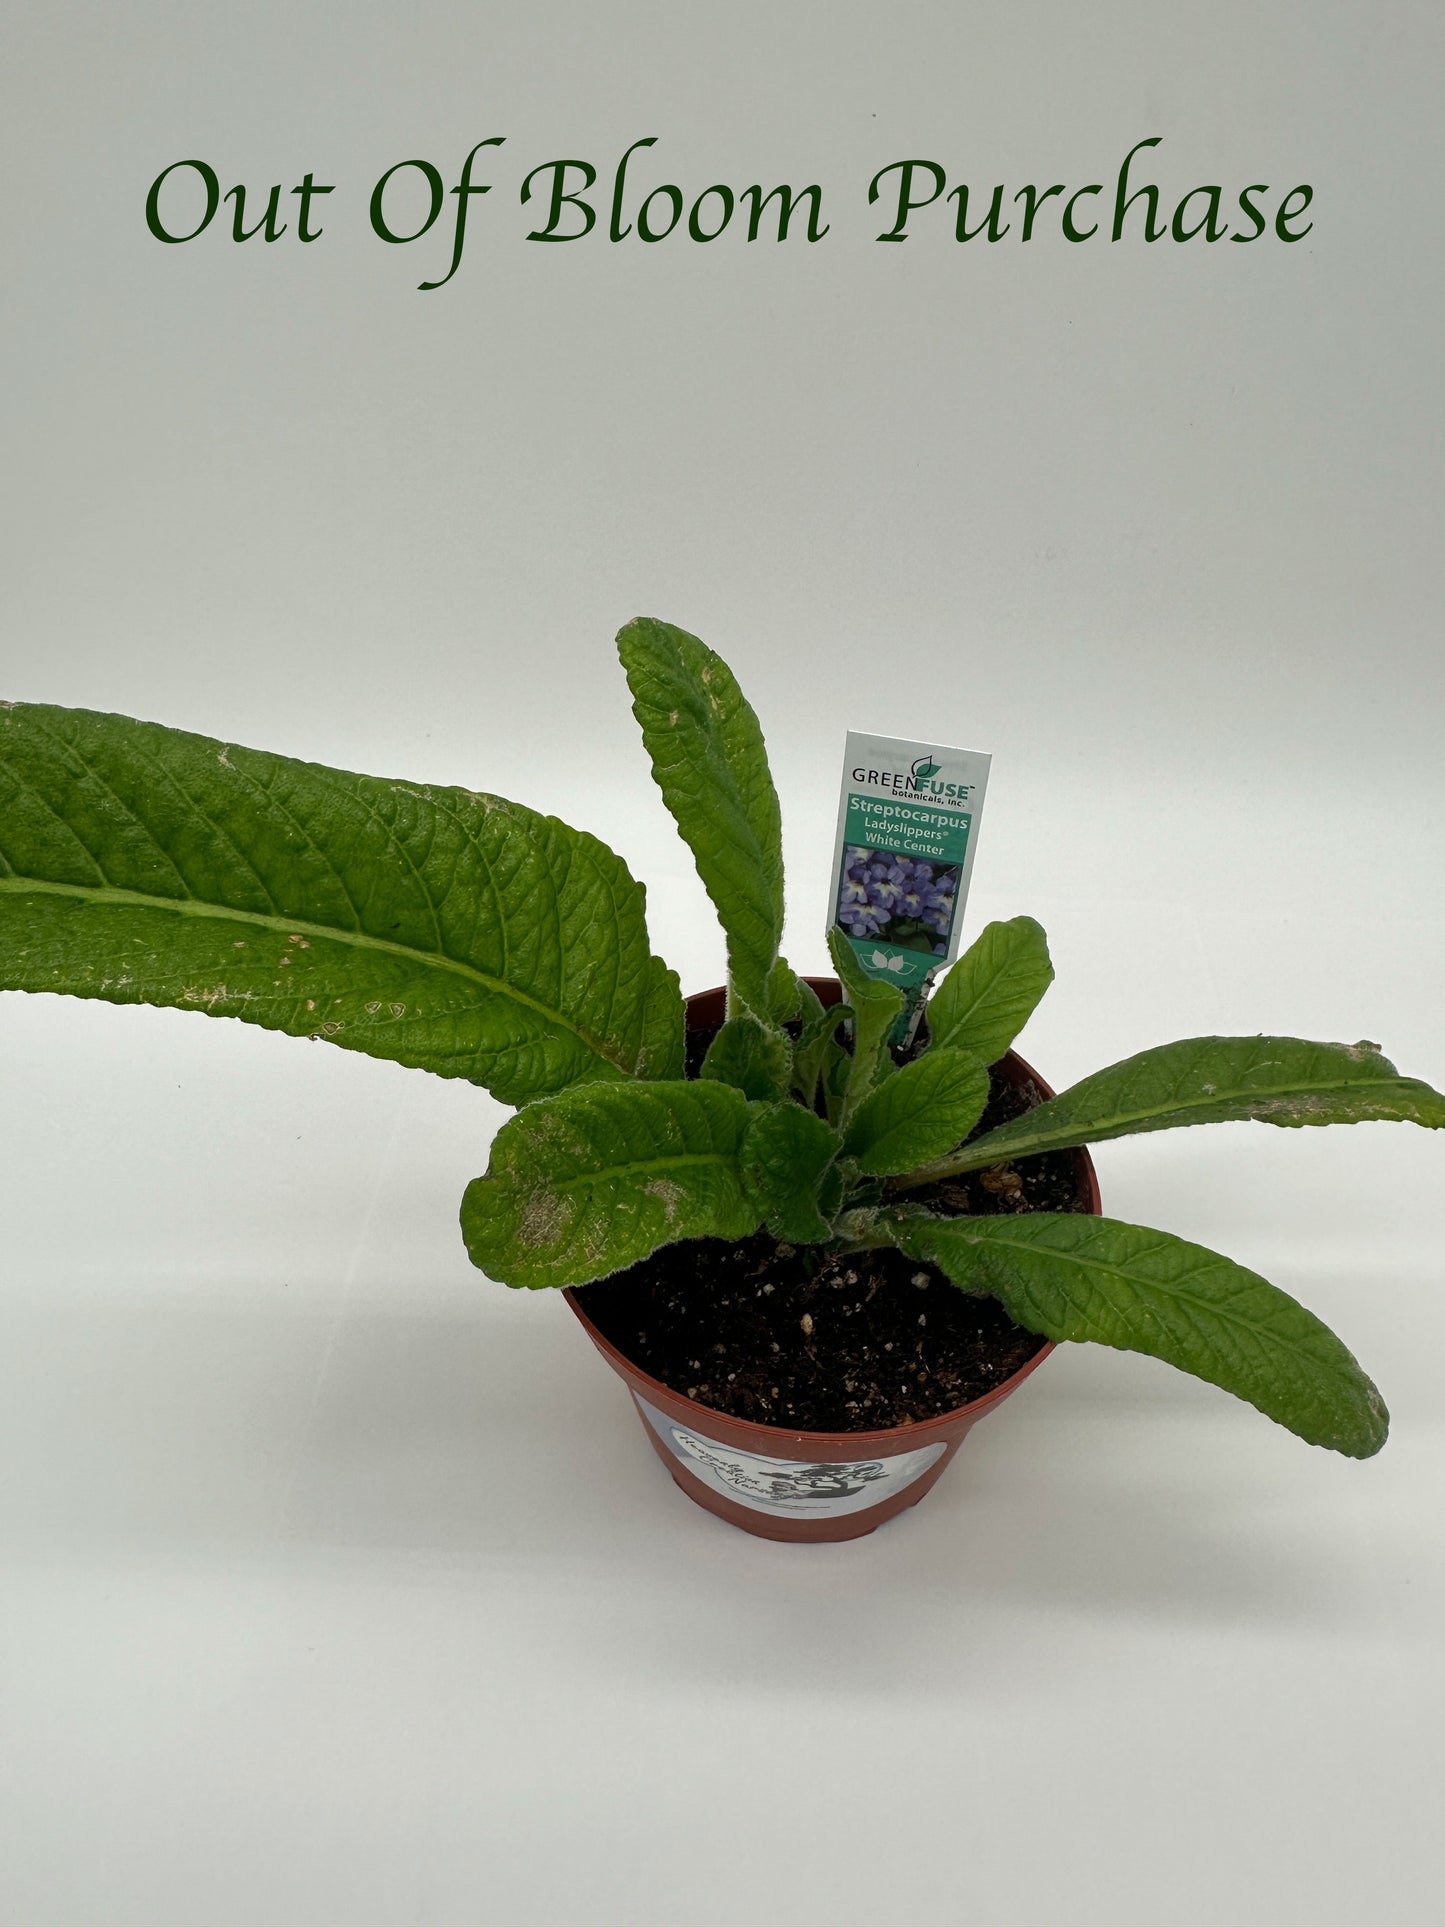 White Center Streptocarpus Ladyslipper (Cape Primrose) Live Plant in 4" nursery pot